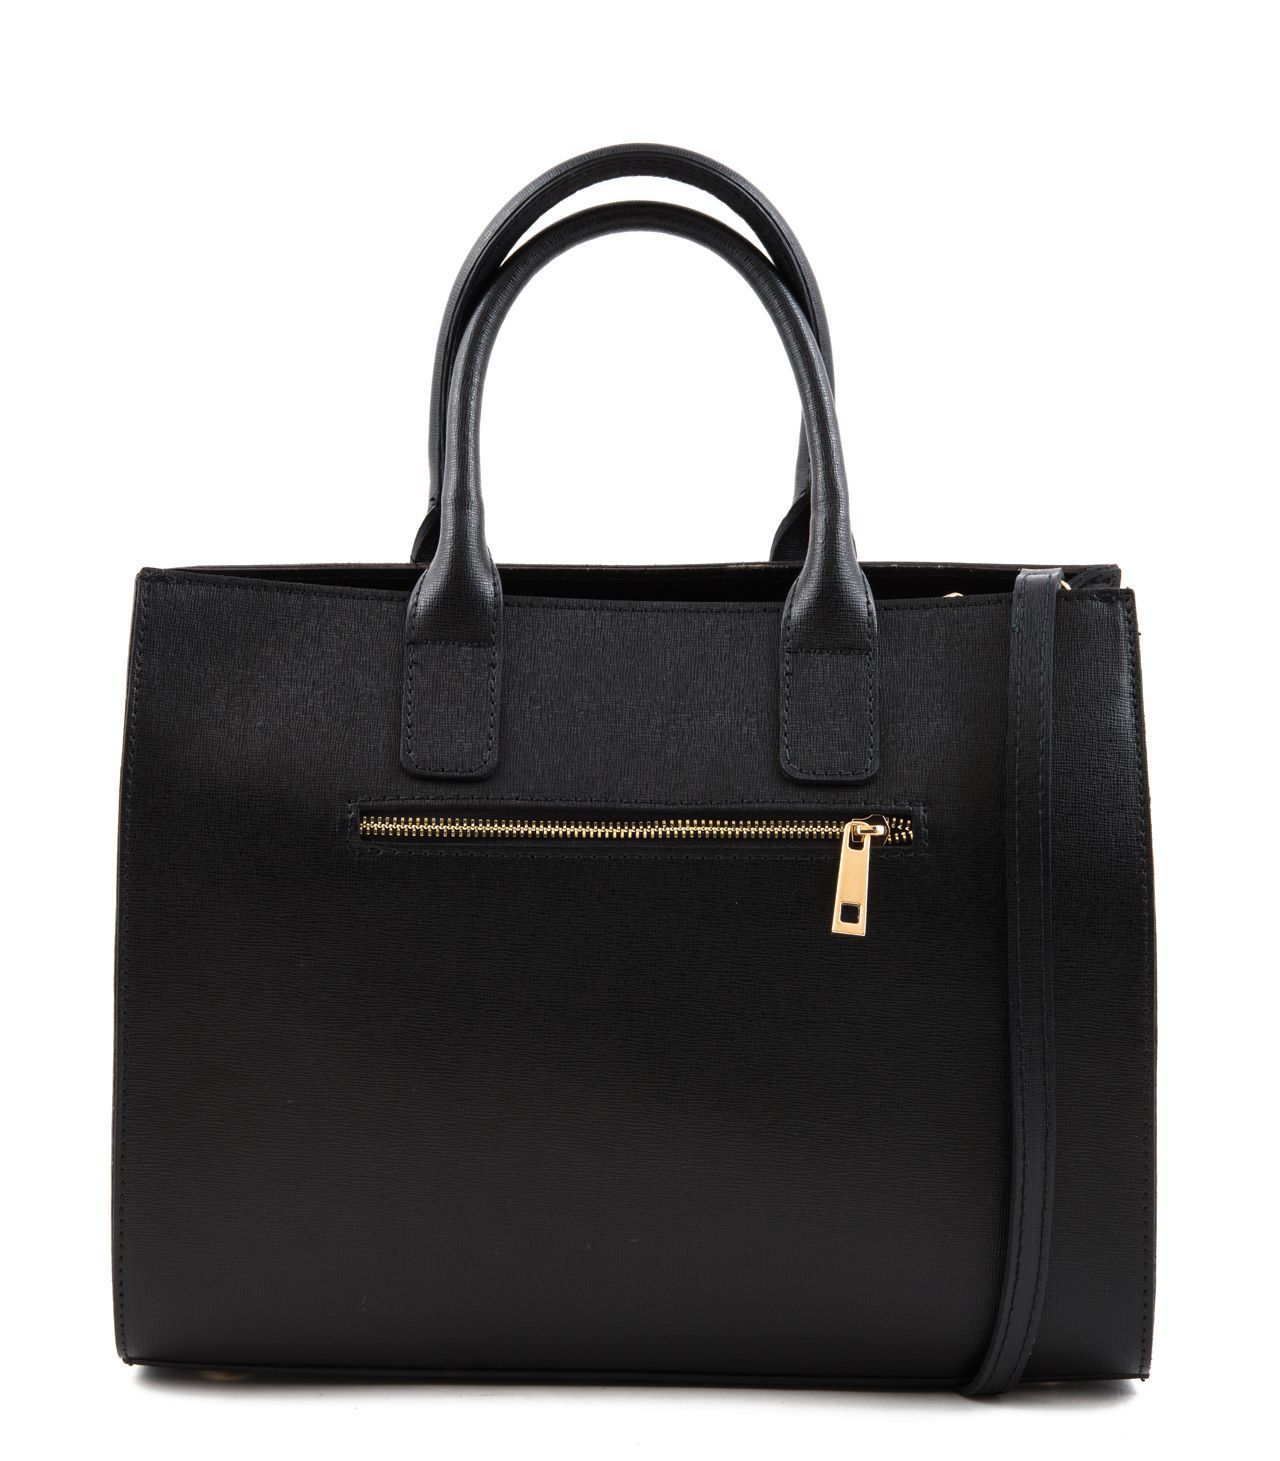 Saffiano leather handbag - Camelia Roma